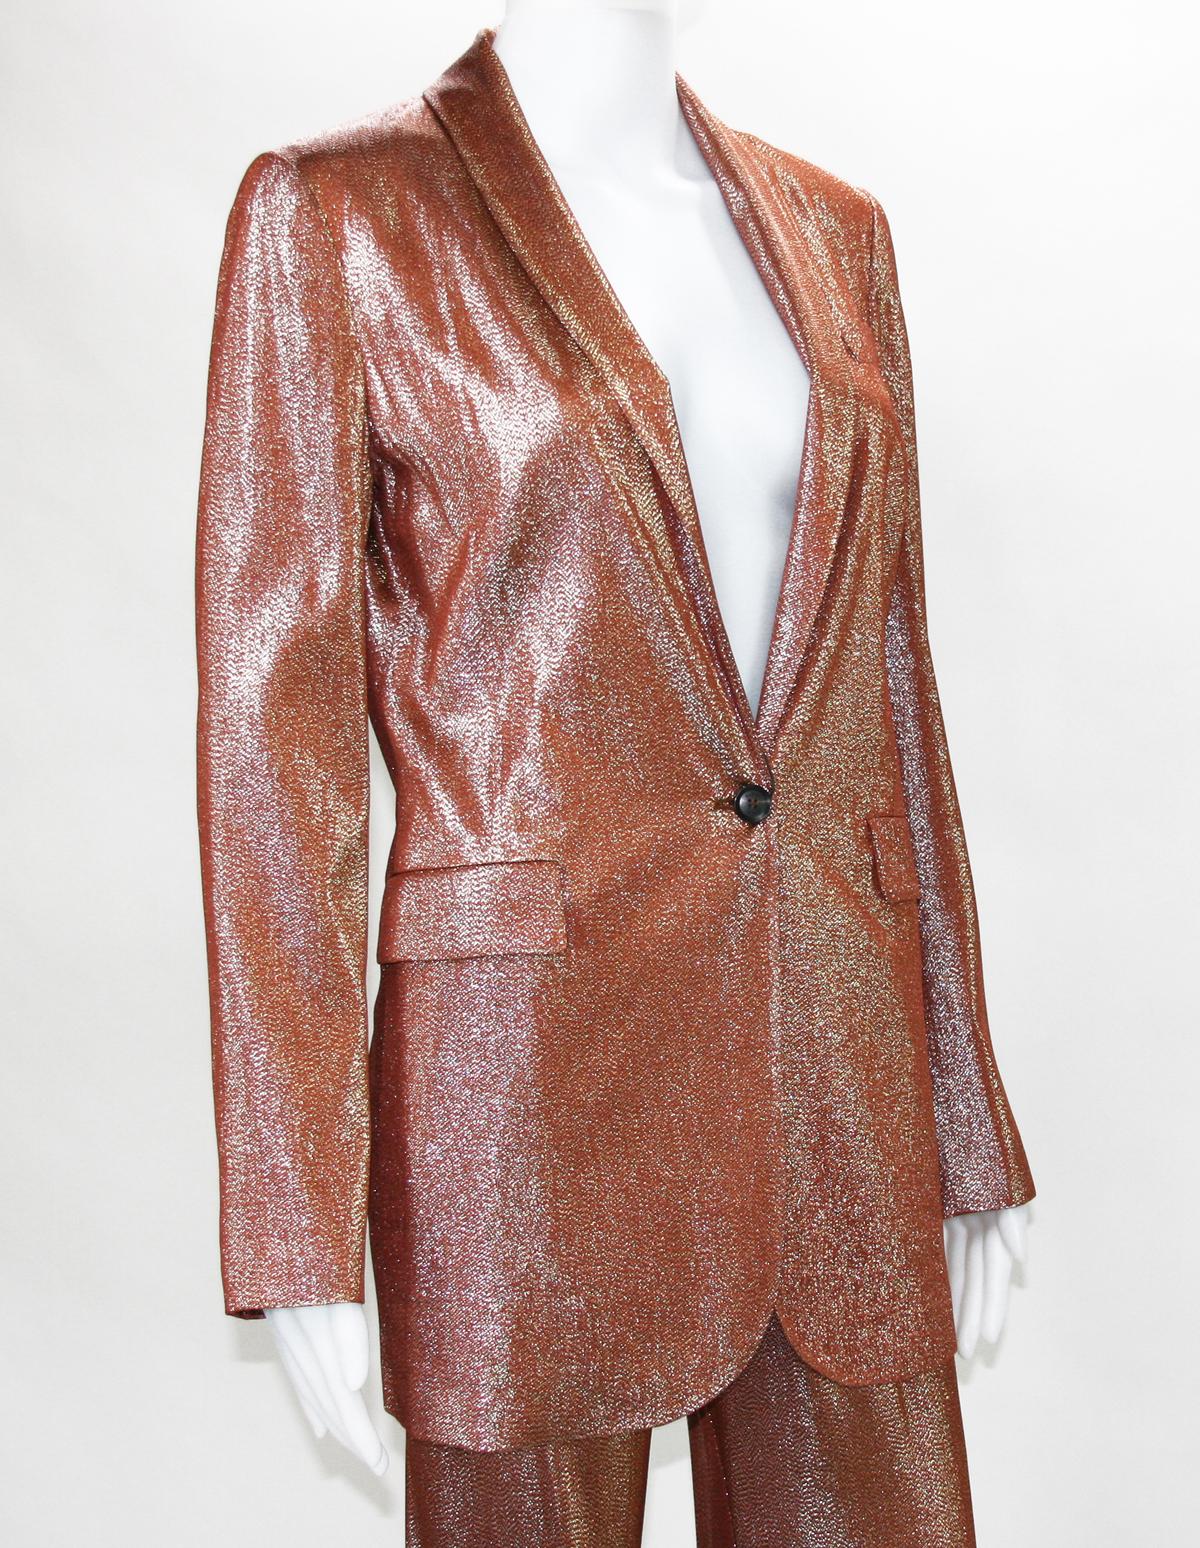 New $3950 Runway GUCCI Suit Iridescent Rust Liquid Lame Jacket & Pants size 40 1